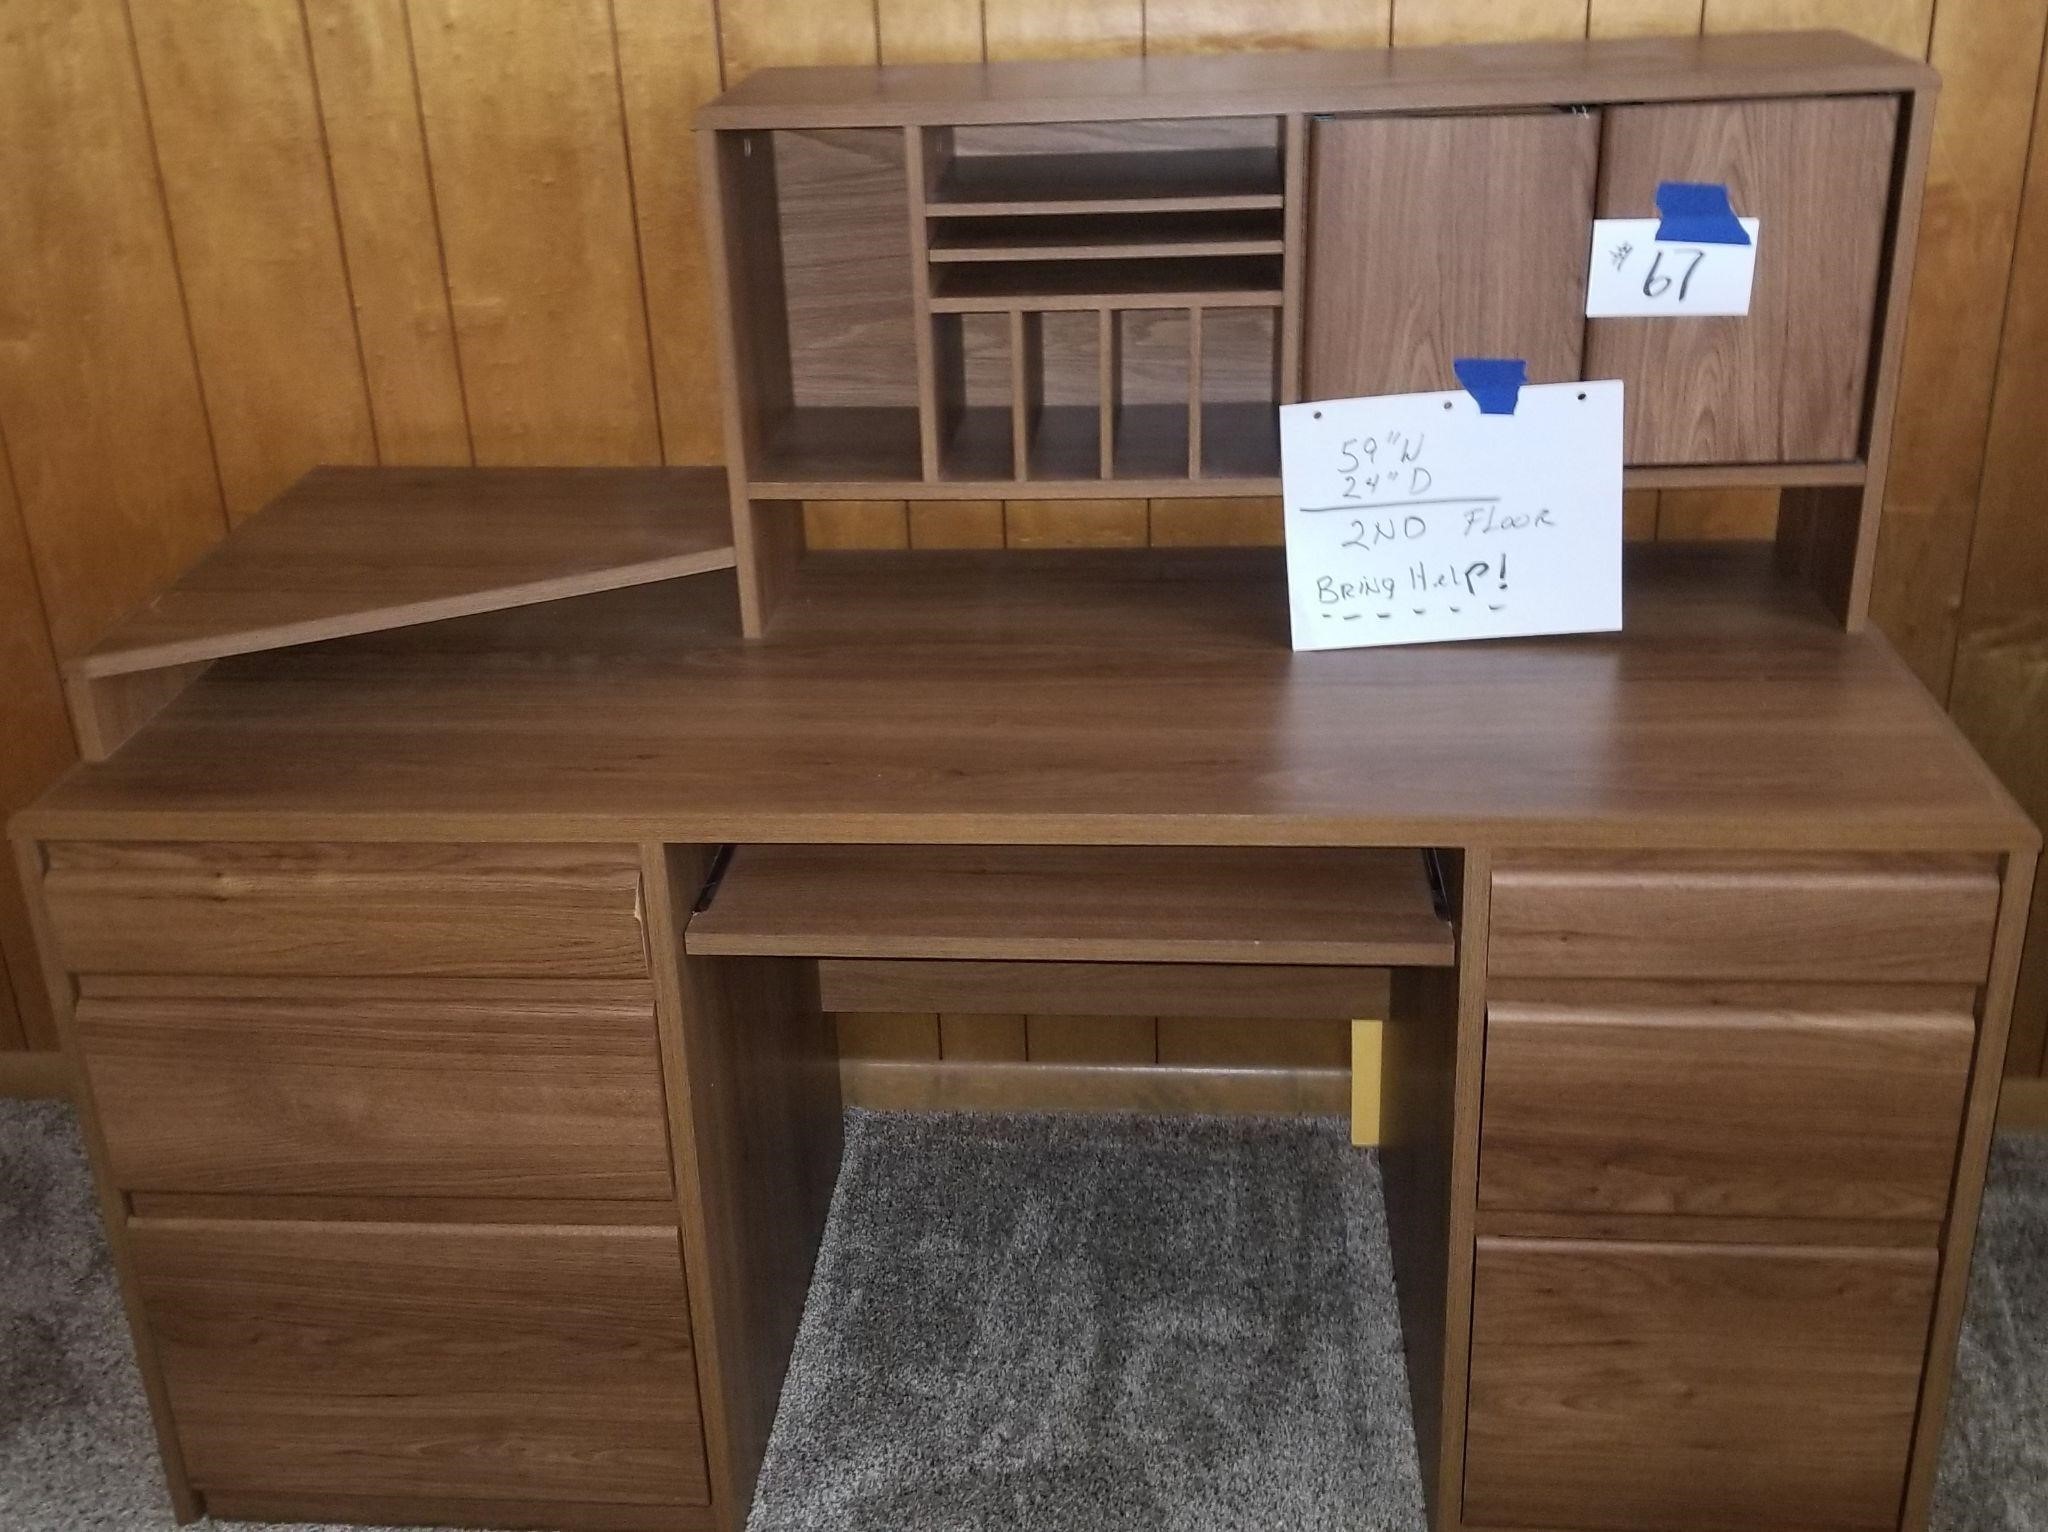 Desk 59” w X 24” d-2nd floor bring help!